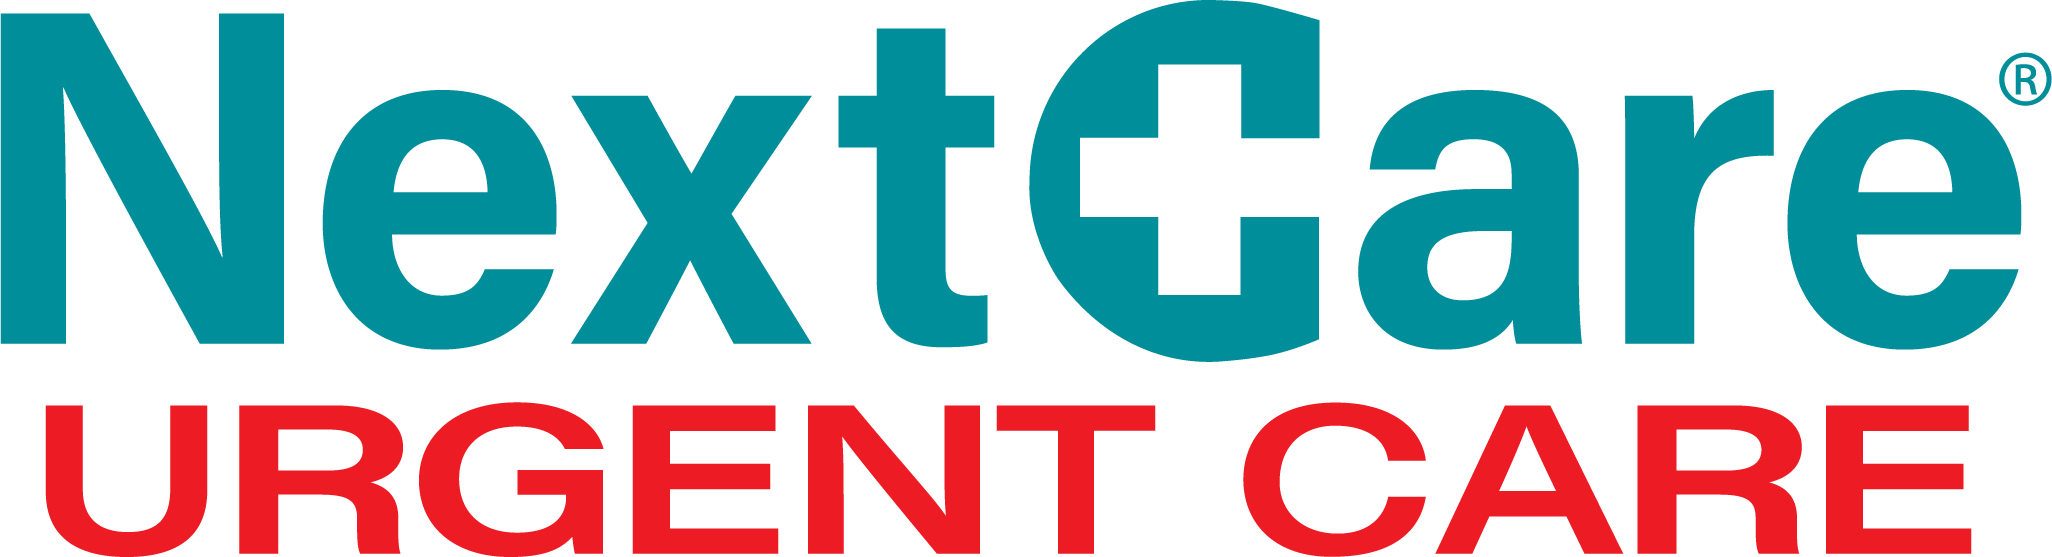 NextCare Urgent Care - Sedona Logo